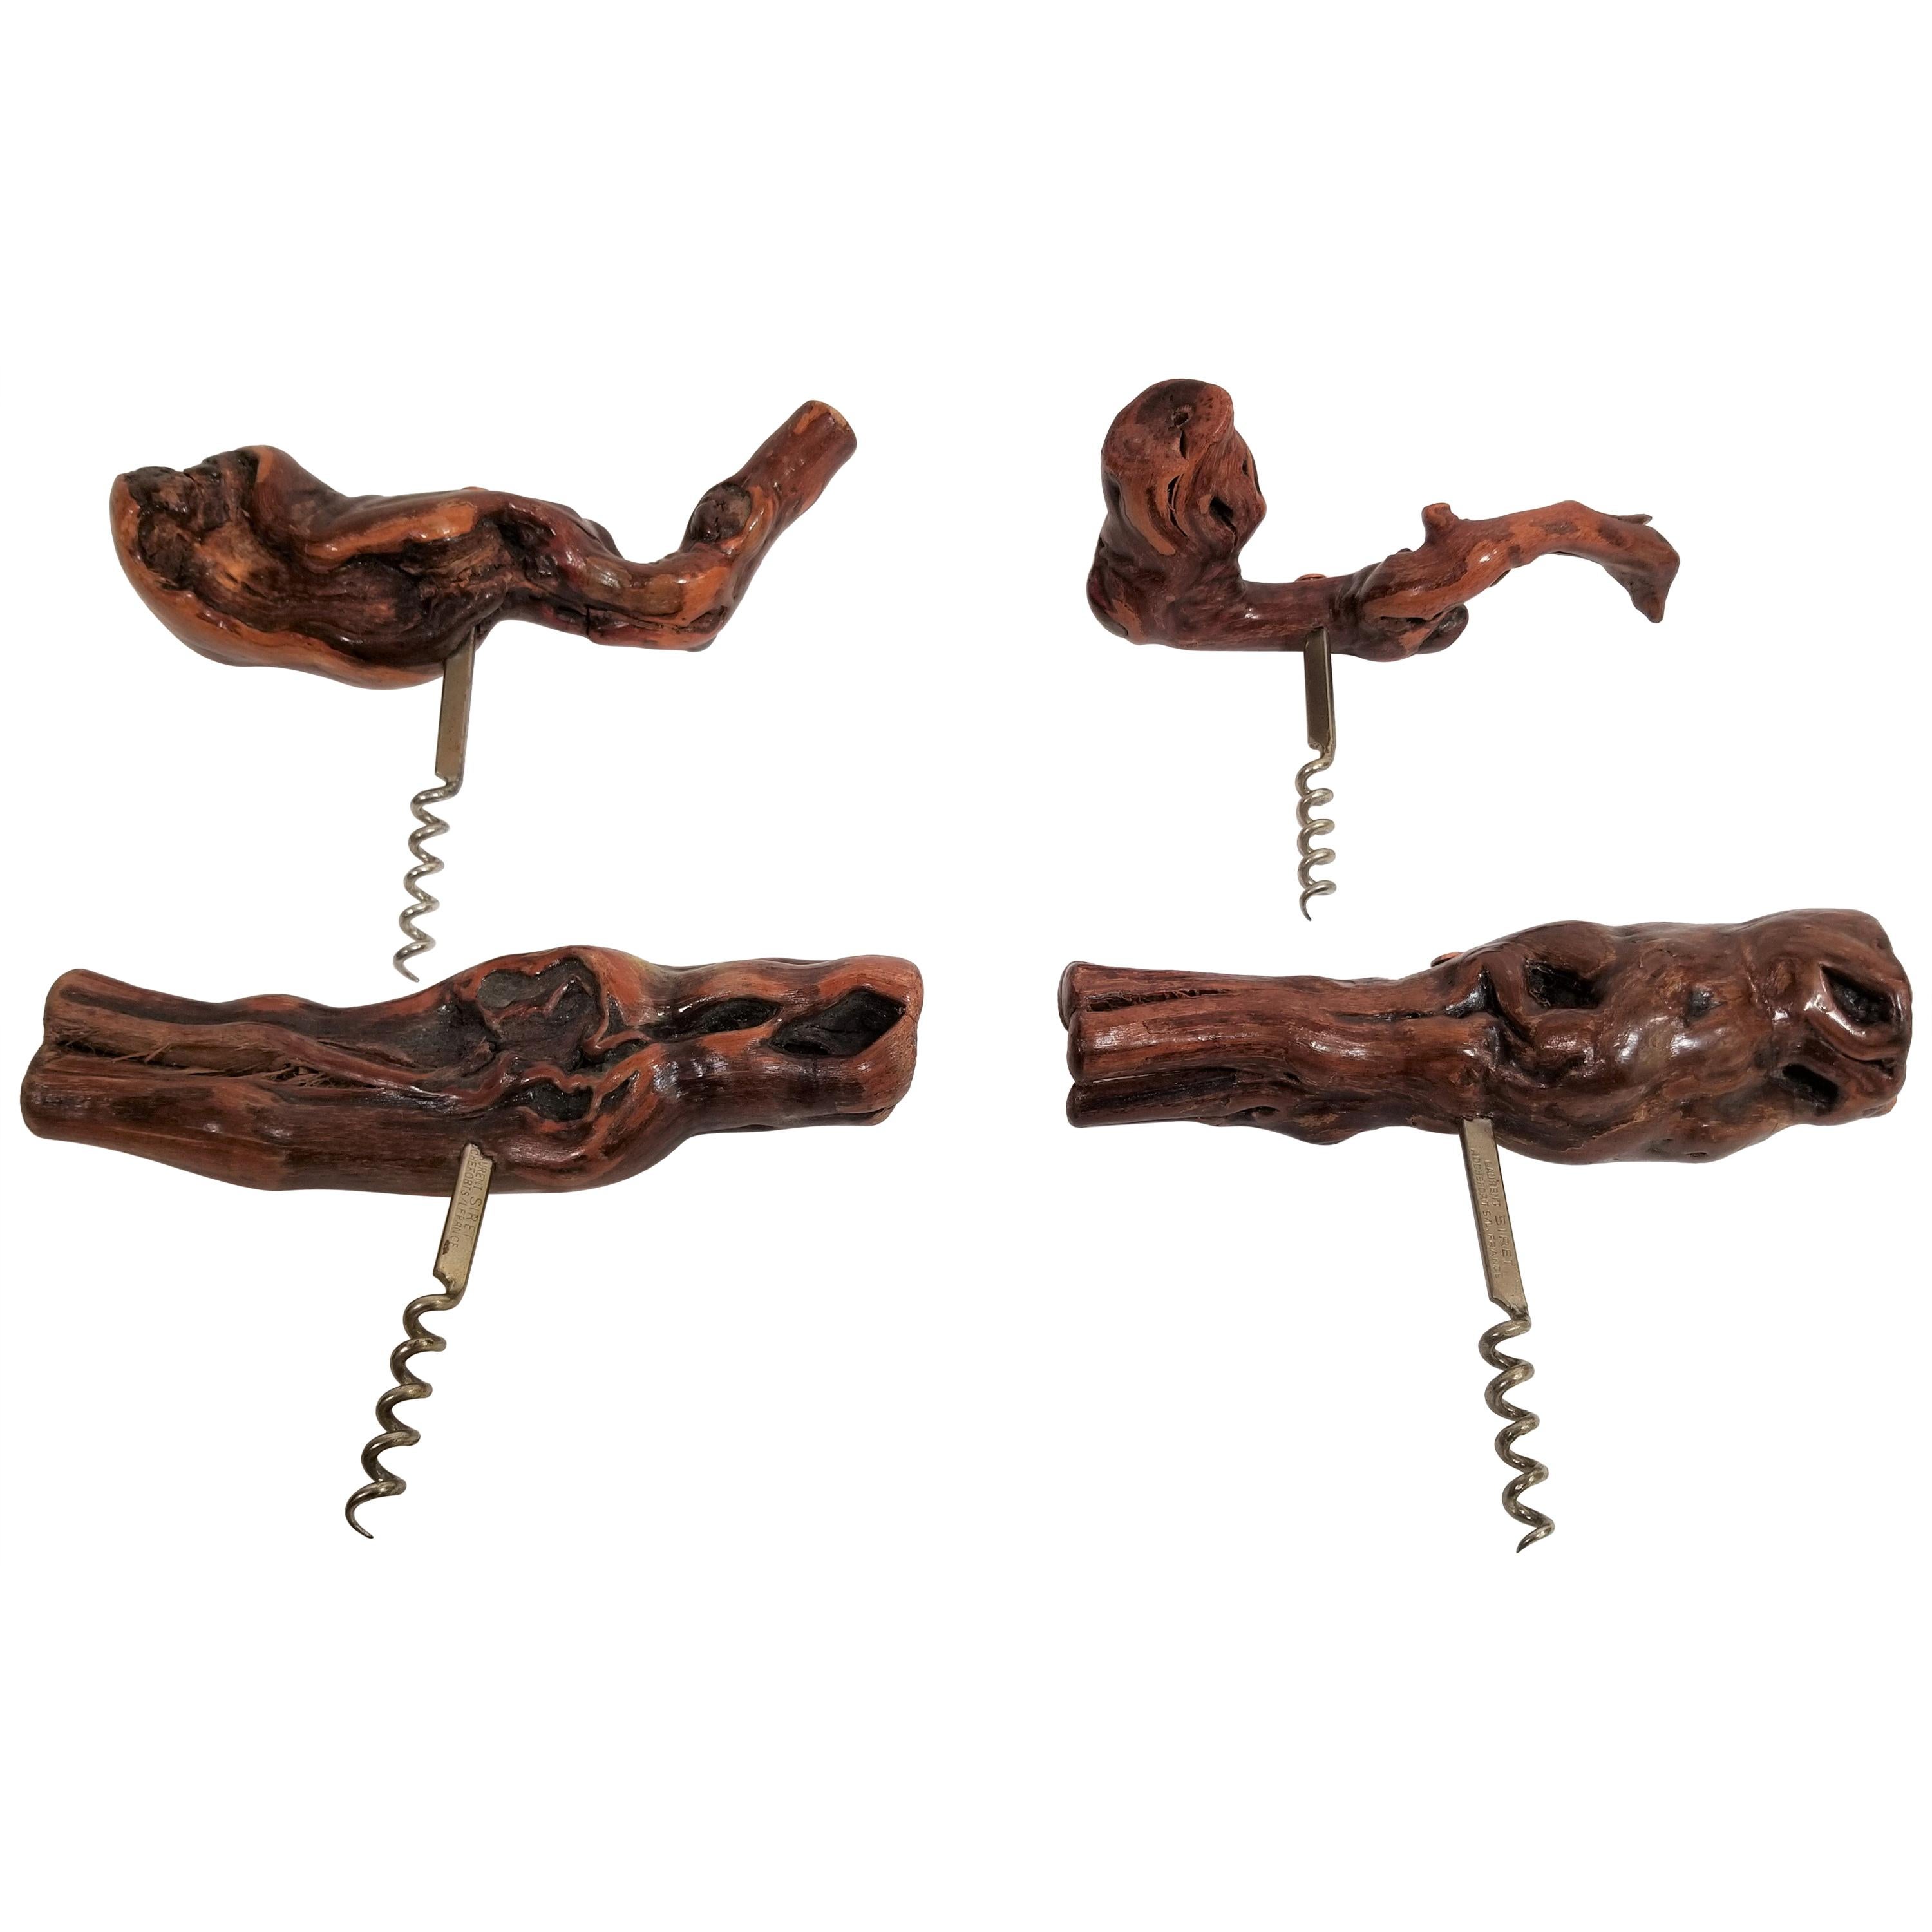 Antique Collection of 4 Laurent Siret, France French Burlwood Corkscrews For Sale